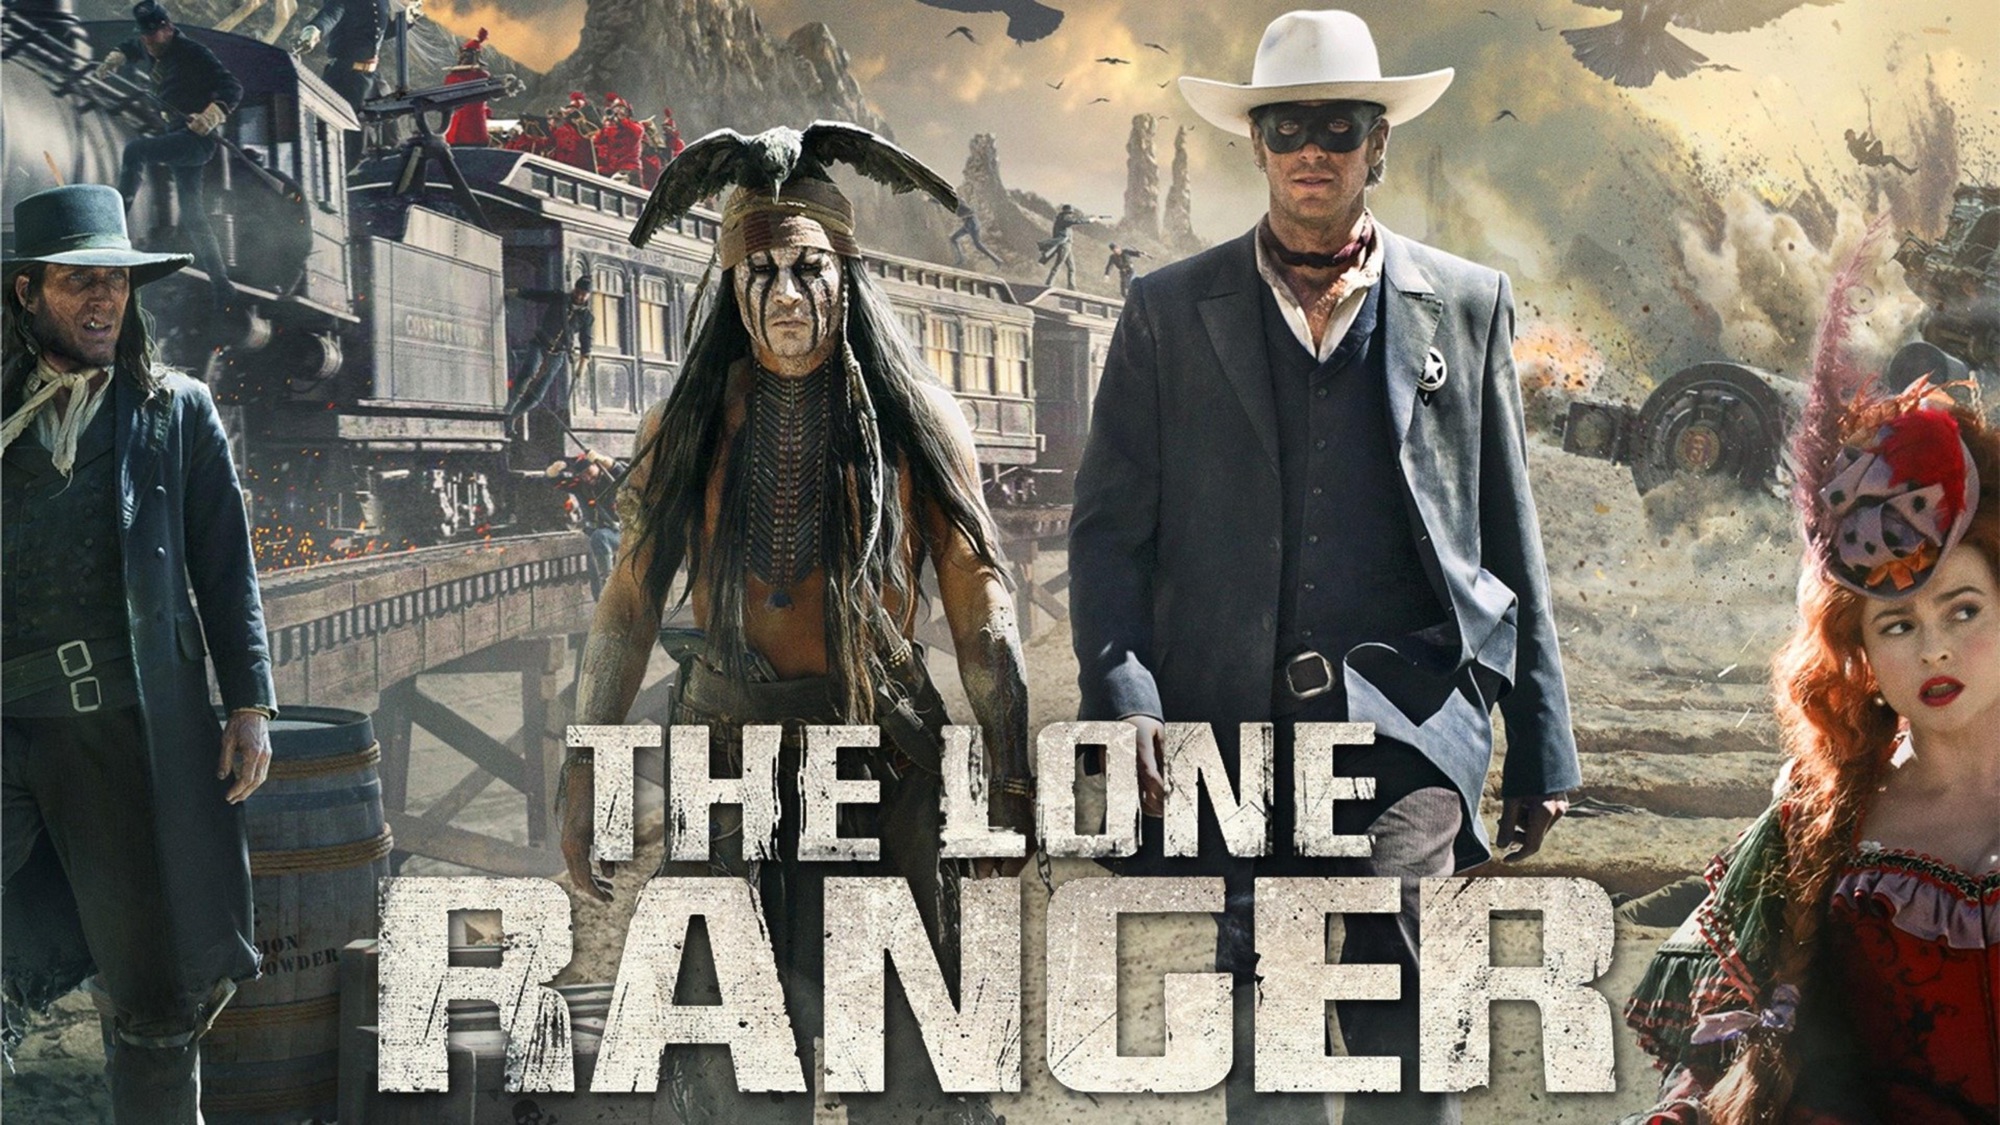 the lone ranger movie